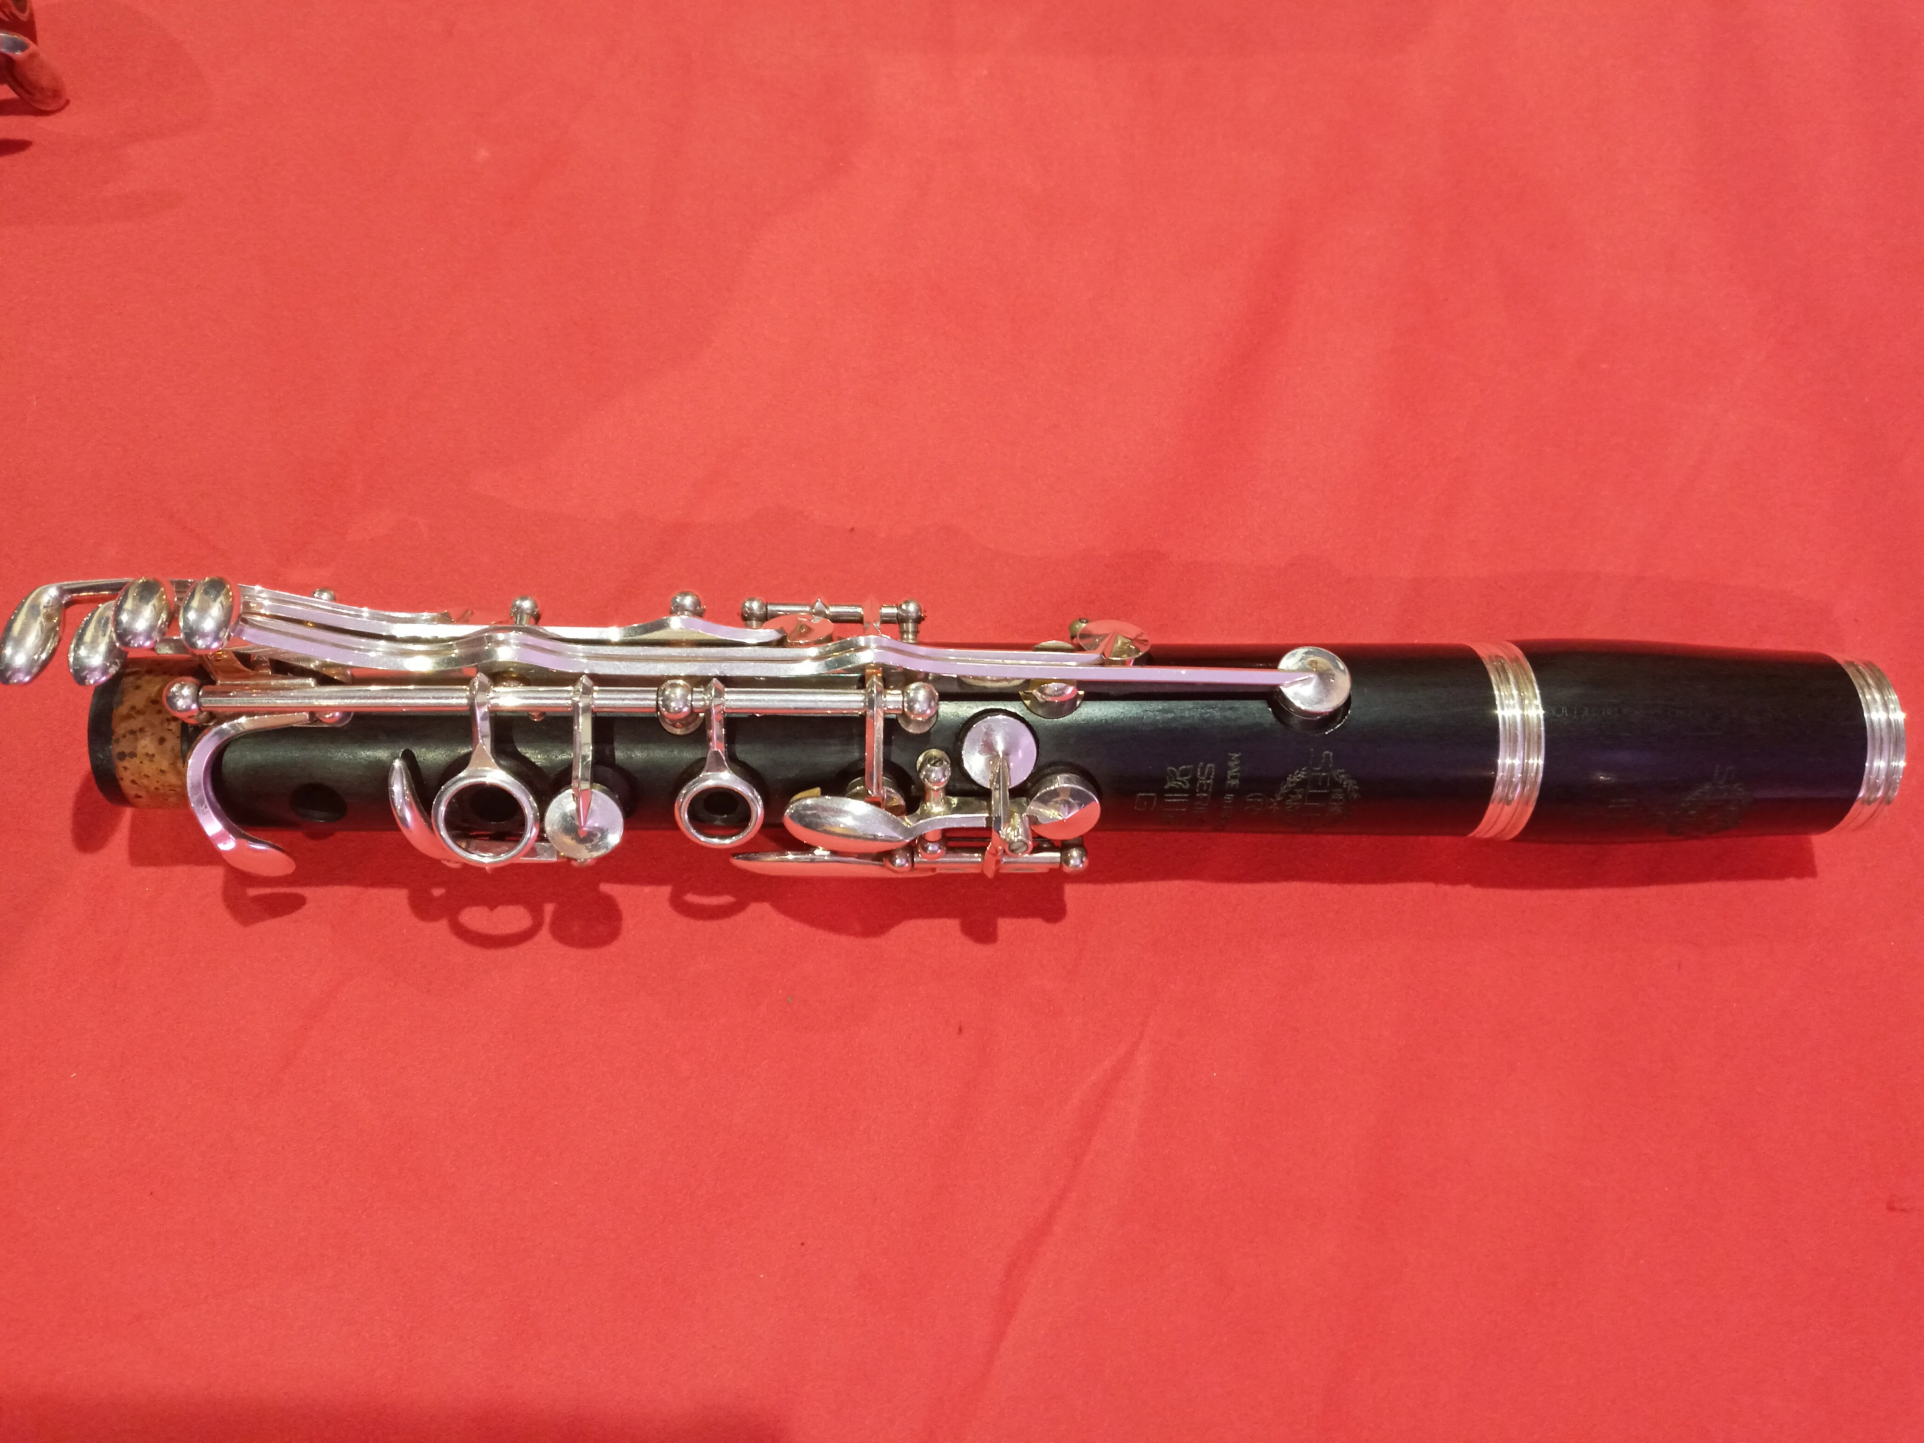 10 G Bb clarinet - Ad ReWIND by Henri SELMER Paris